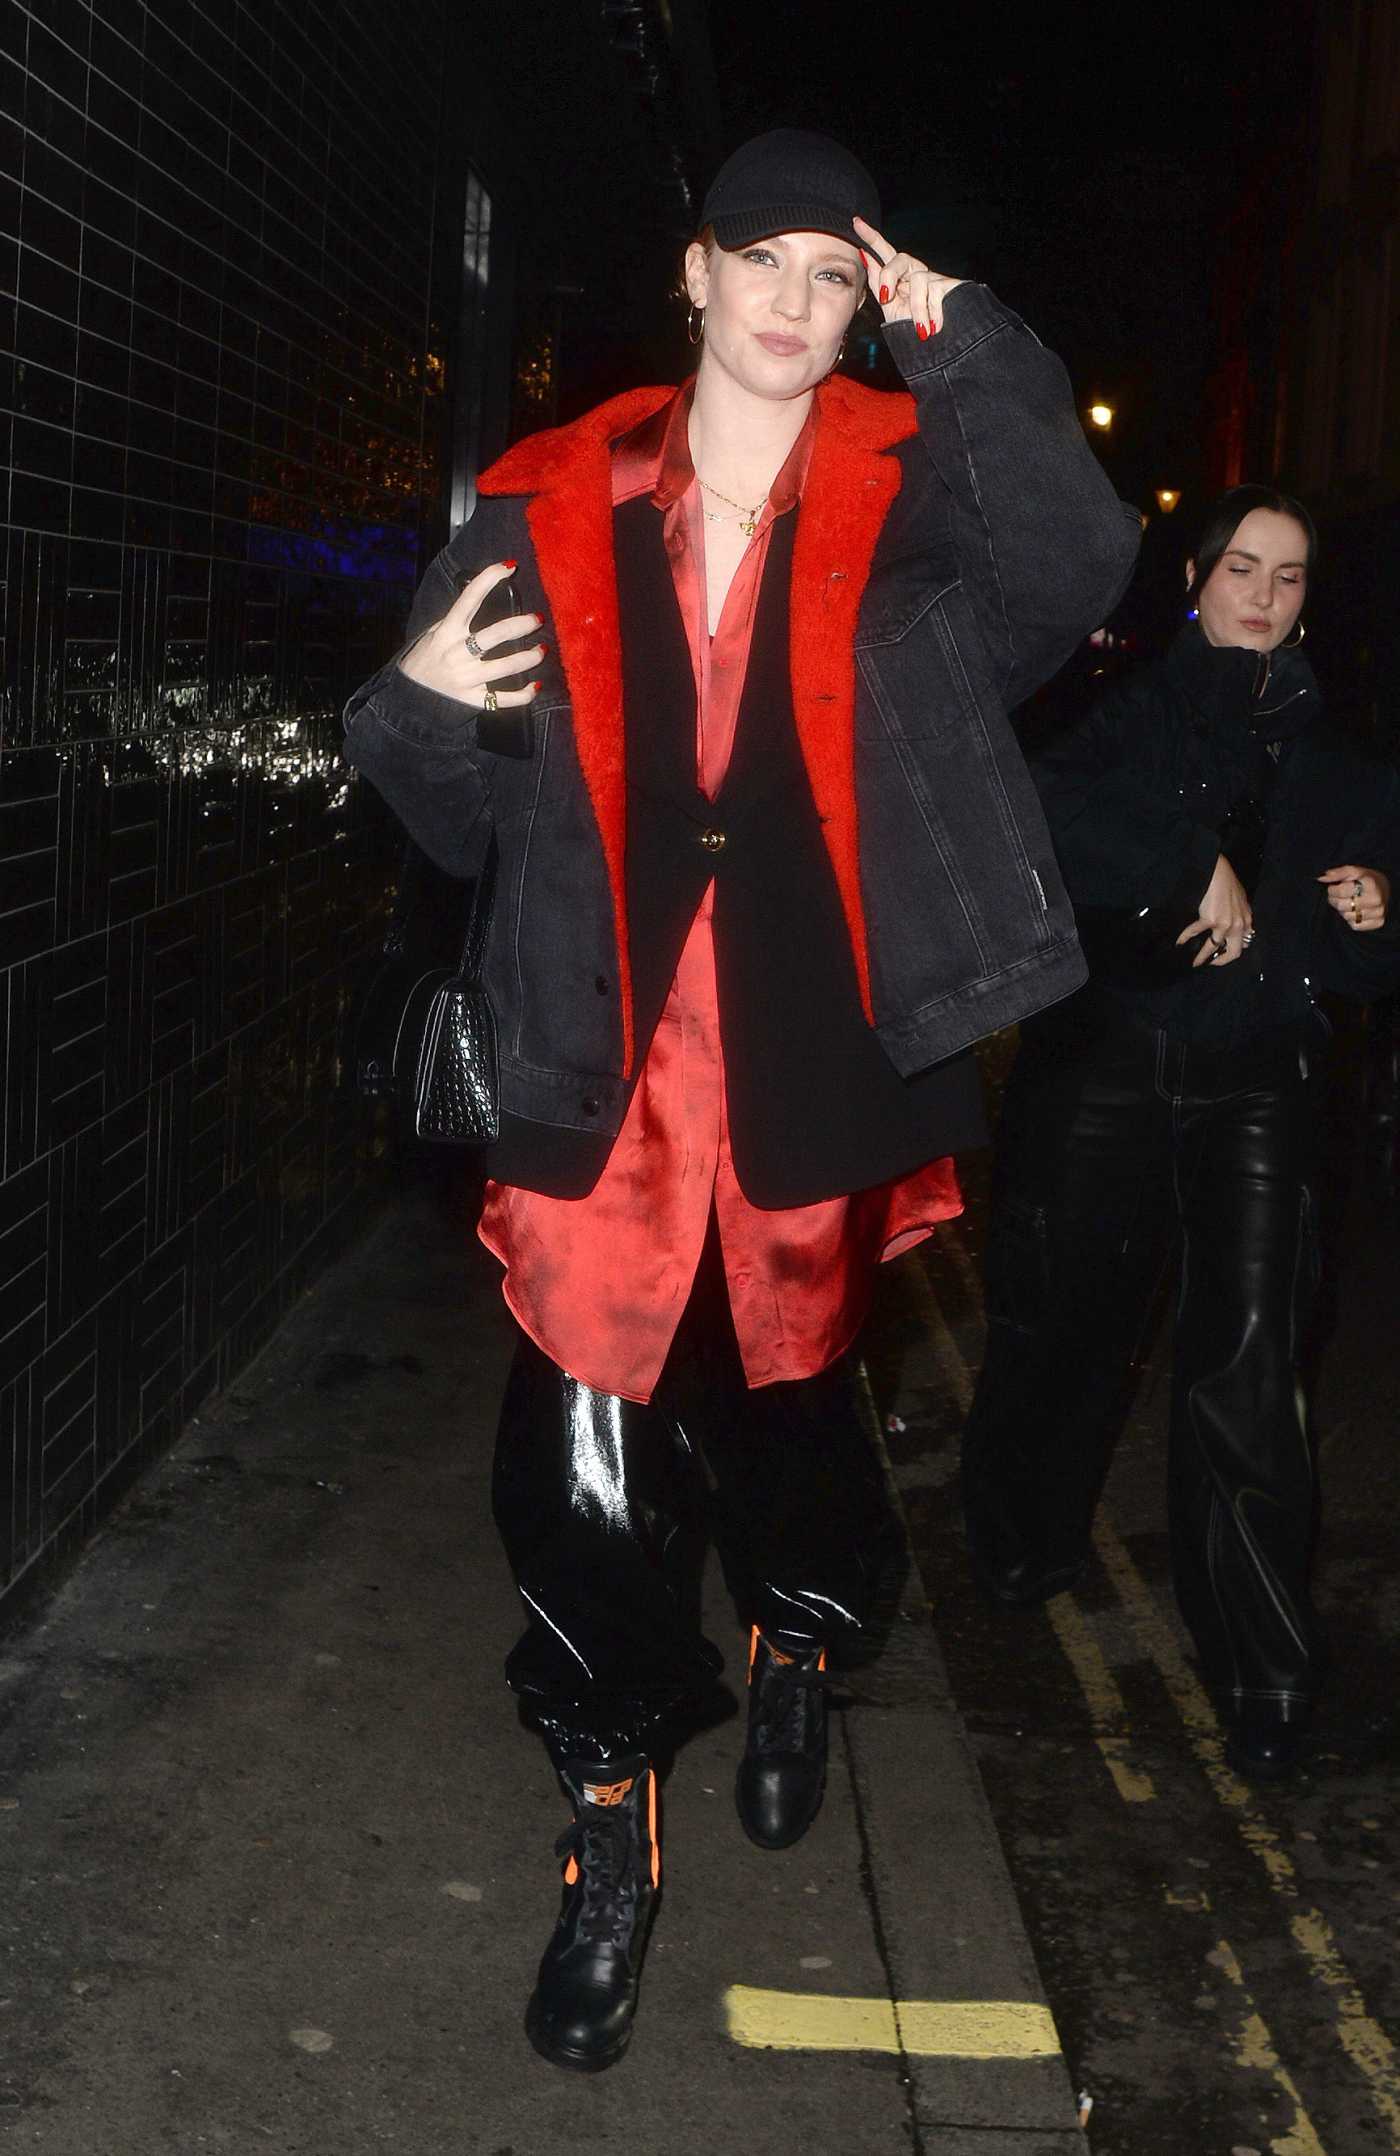 Jess Glynne in a Black Cap Arrives at the Vas J Morgans Party in London 12/02/2021